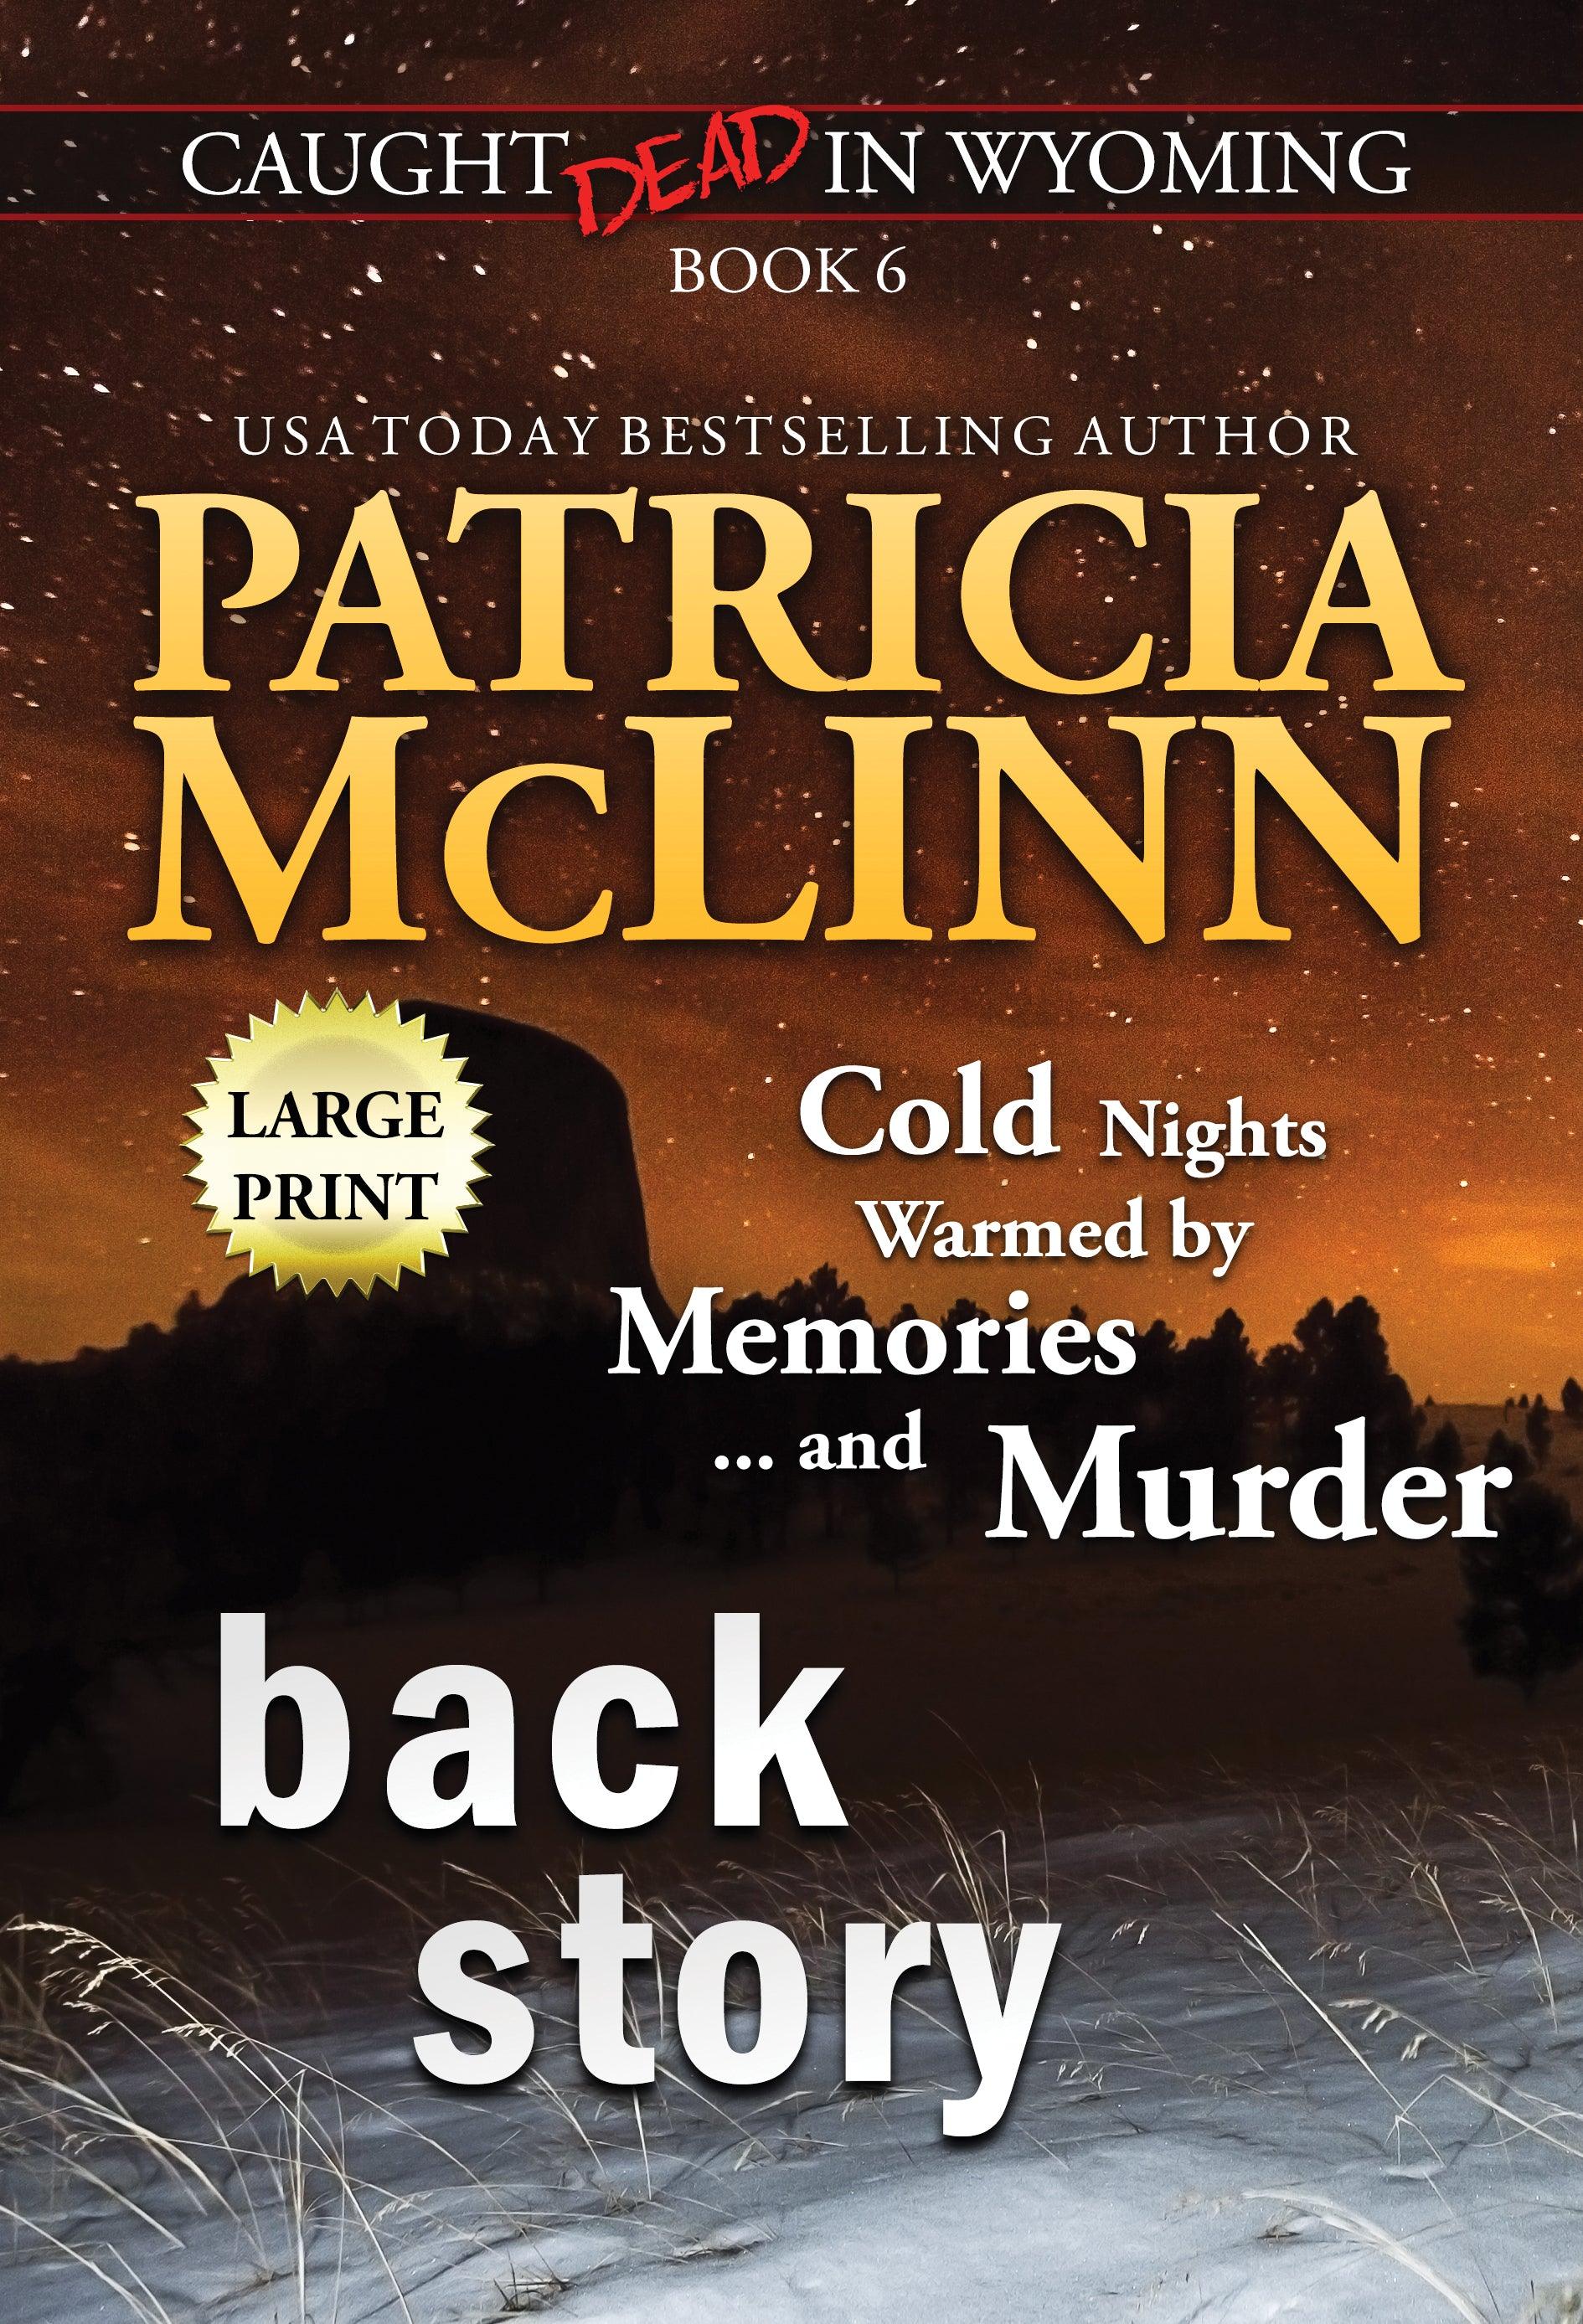 Back Story: Large Print - Patricia McLinn